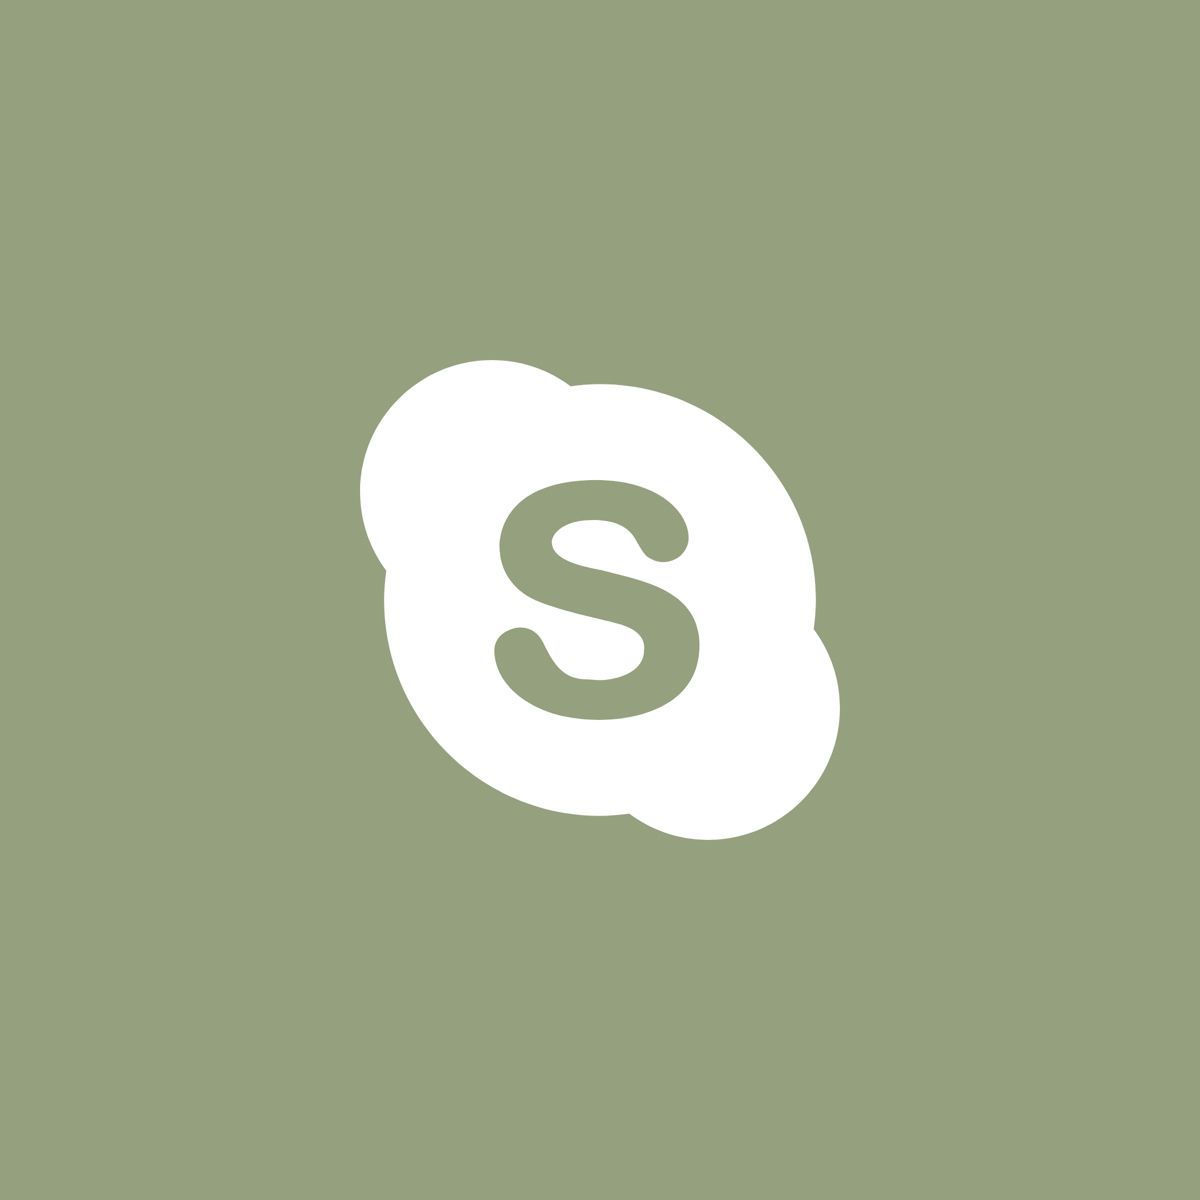  Skype Hintergrundbild 1200x1200. Green skype app icon. Hintergrund iphone, Grüne hintergründe, Hintergrundbilder